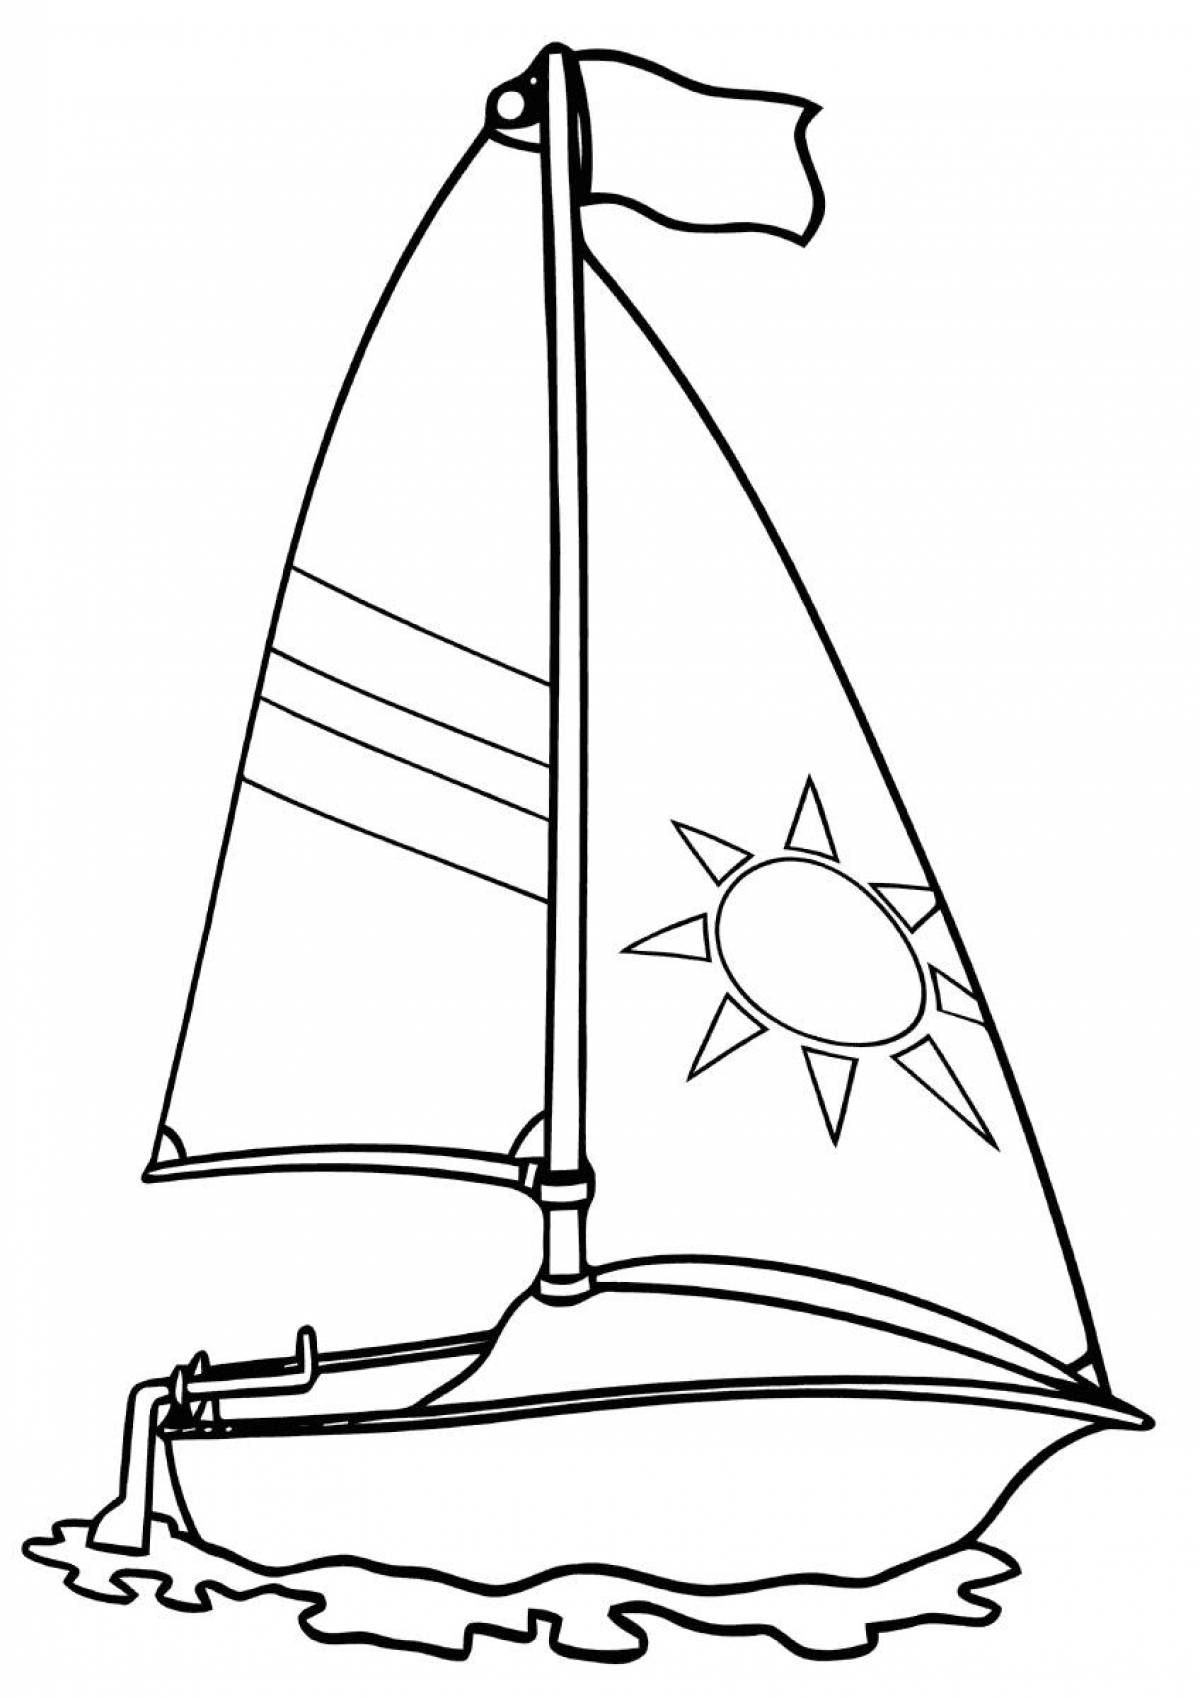 Sailboat with sun